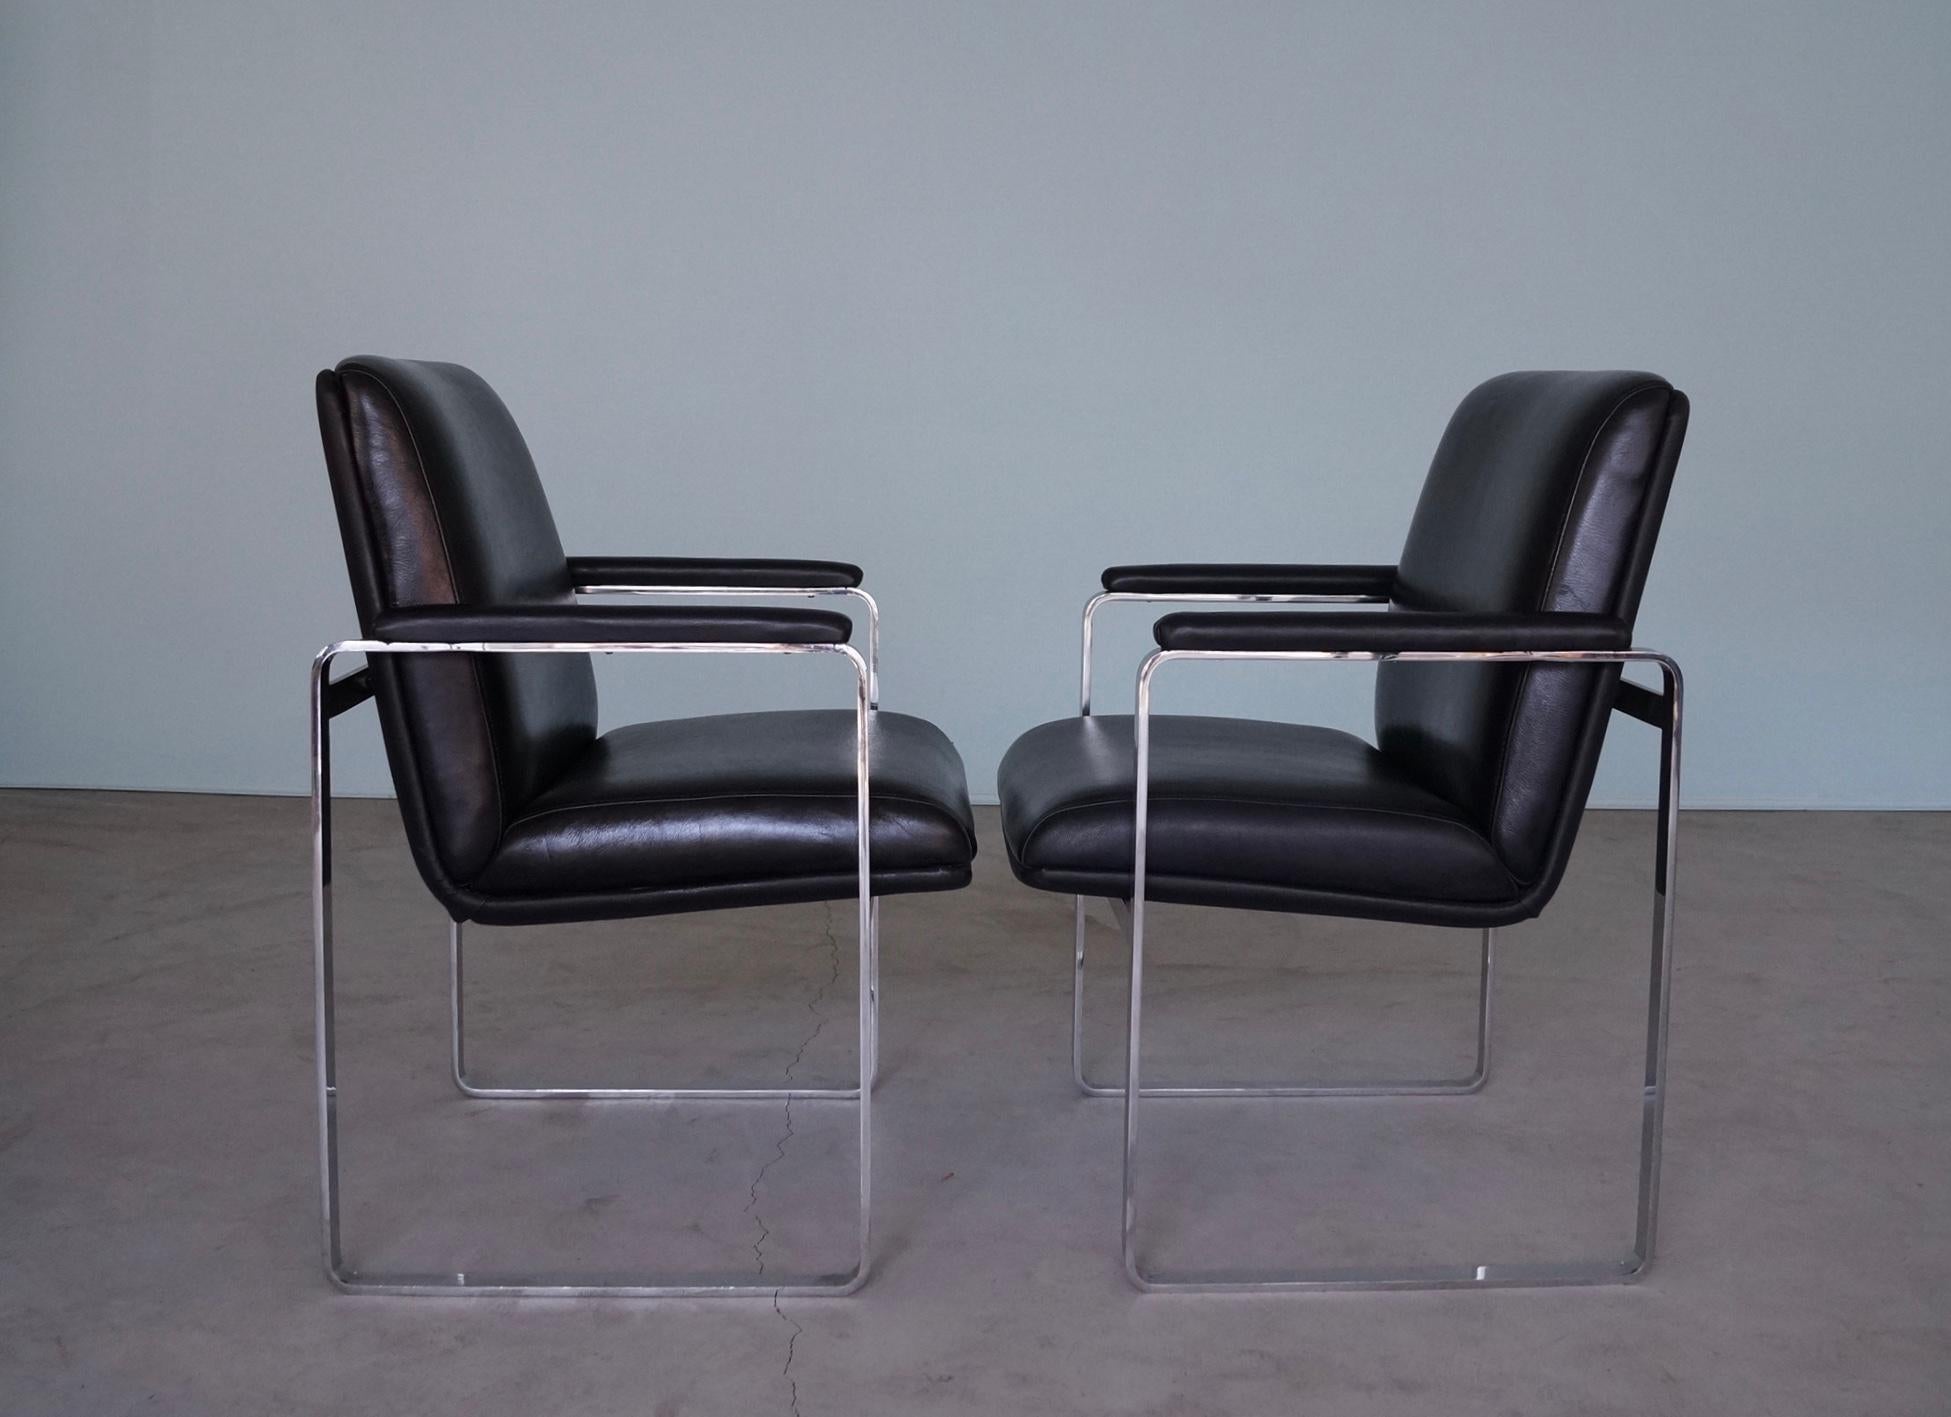 1960's Mid-Century Modern Flat Bar Chrome & Black Leather Armchairs - a Pair For Sale 4